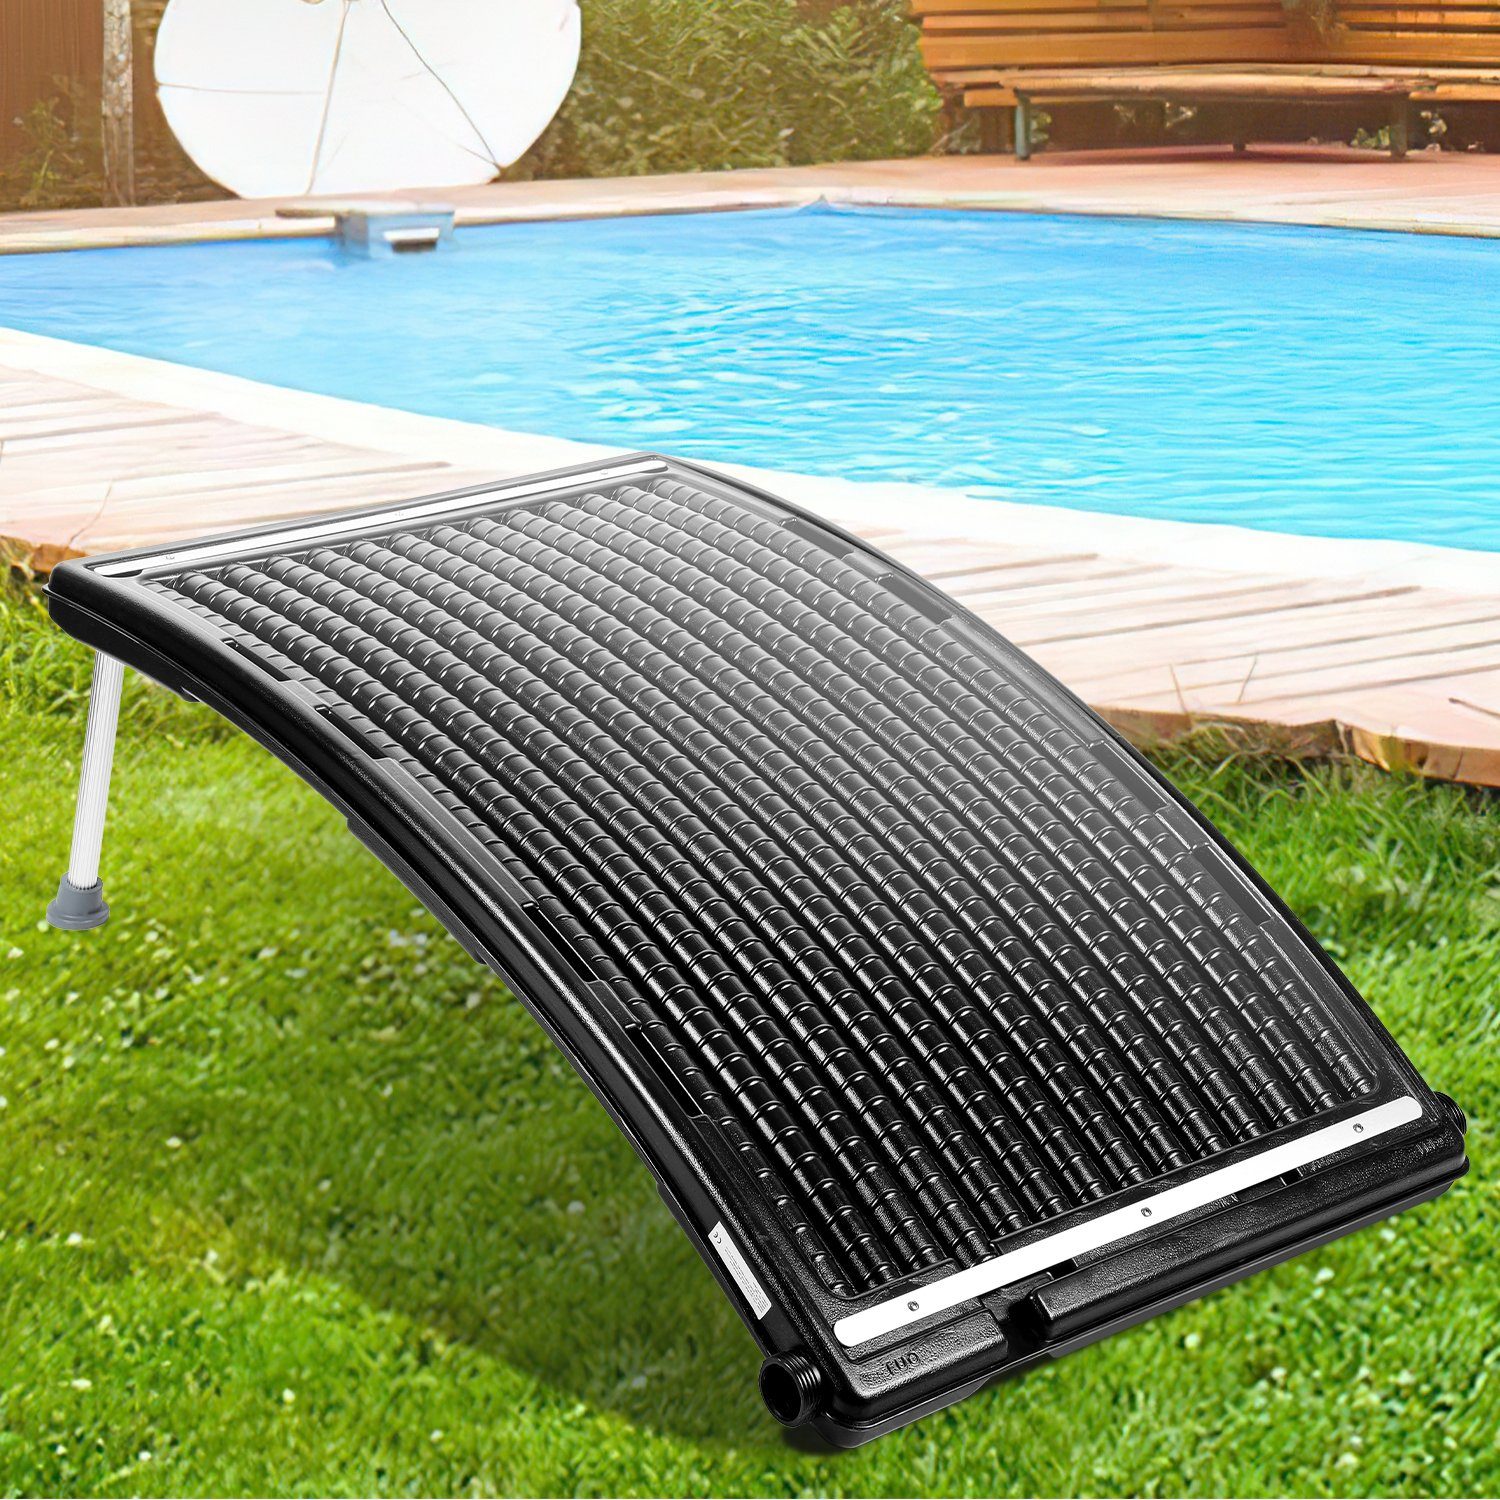 Randaco Pool-Wärmepumpe Solarheizung Wassererwärmer Heizung Poolheizung Solarboard Solar